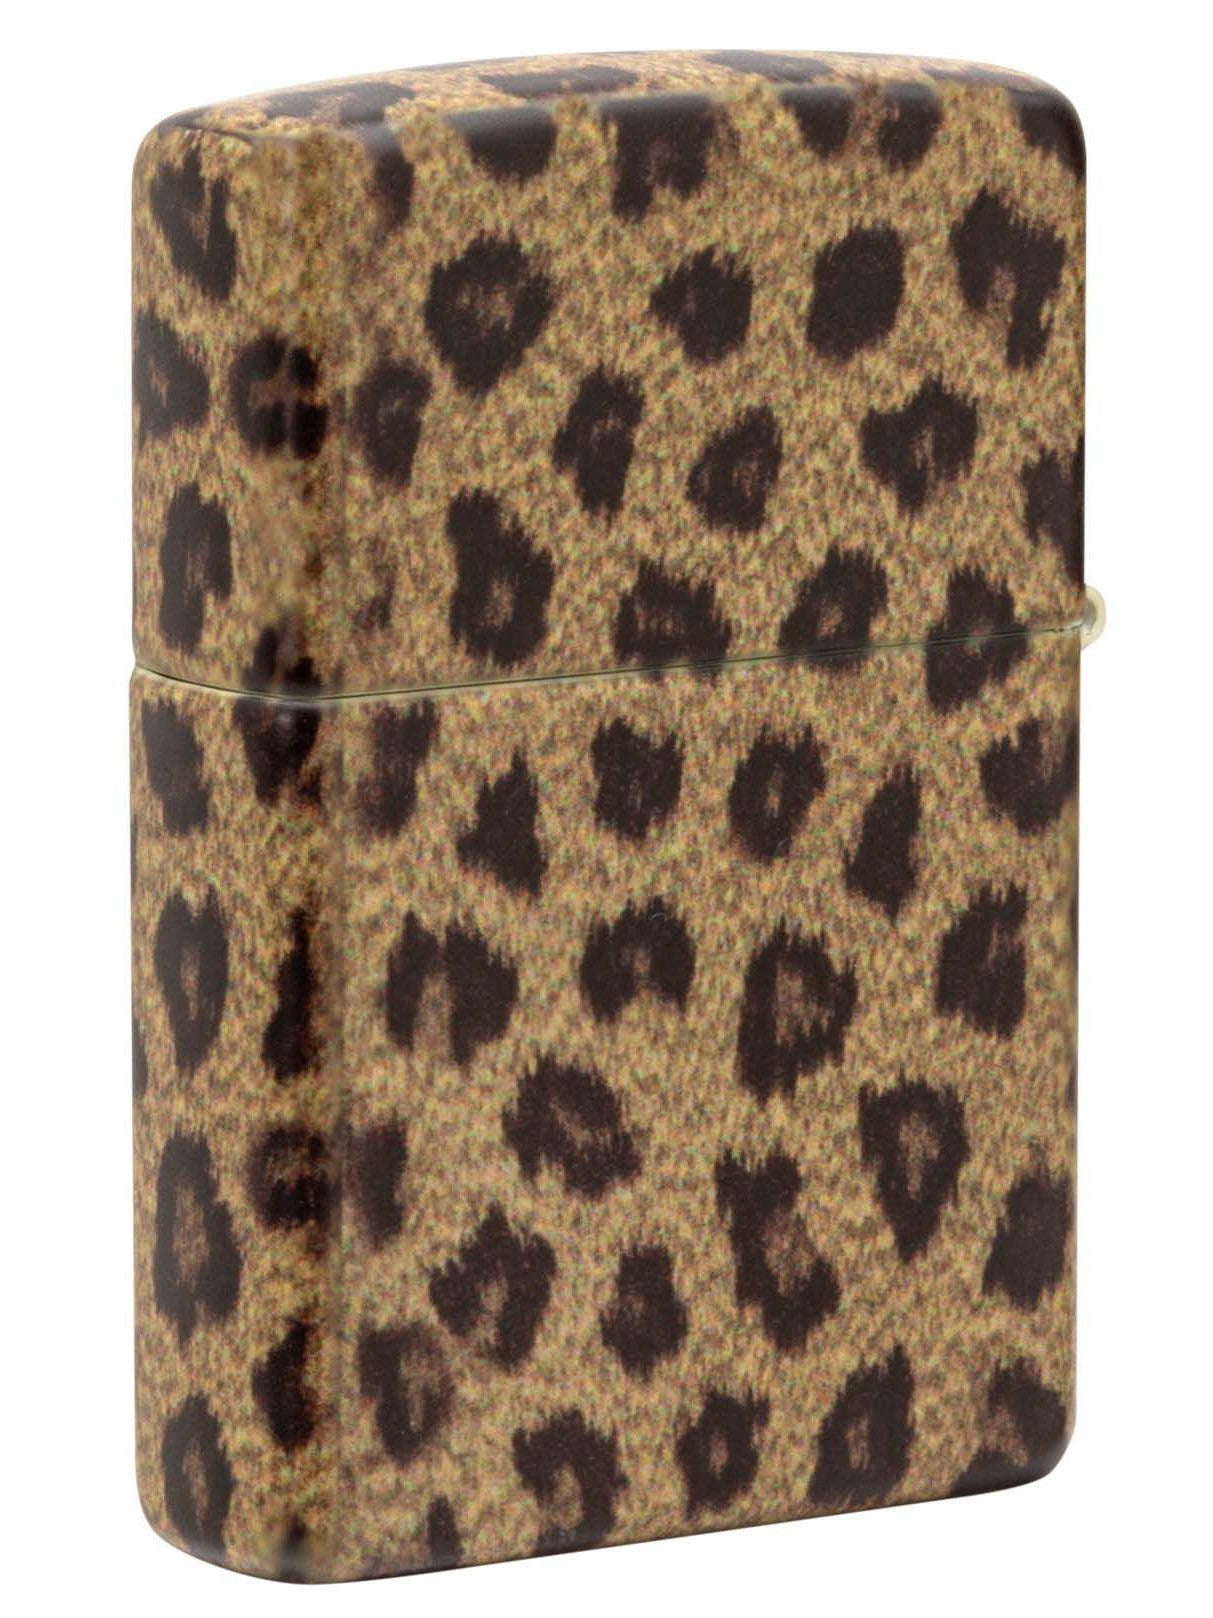 Zippo Lighter: Leopard Print - 540 Color 48219